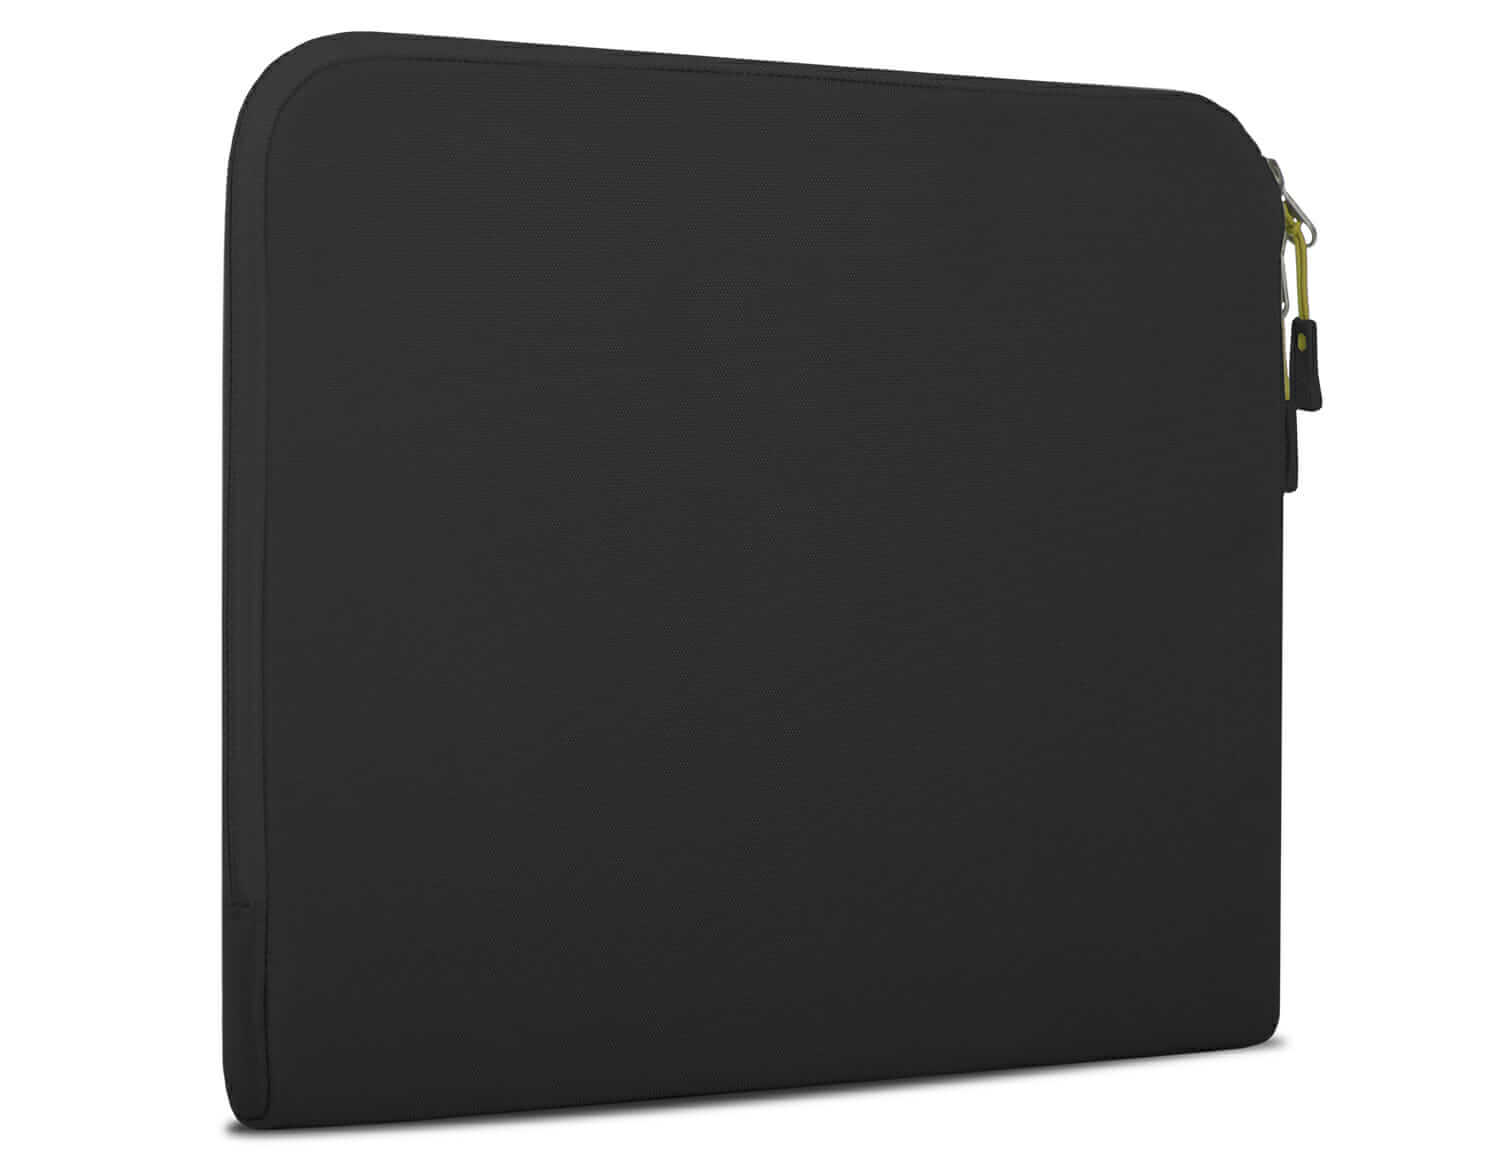 13 stm-114-168M-01 STM Summary Laptop Sleeve Black